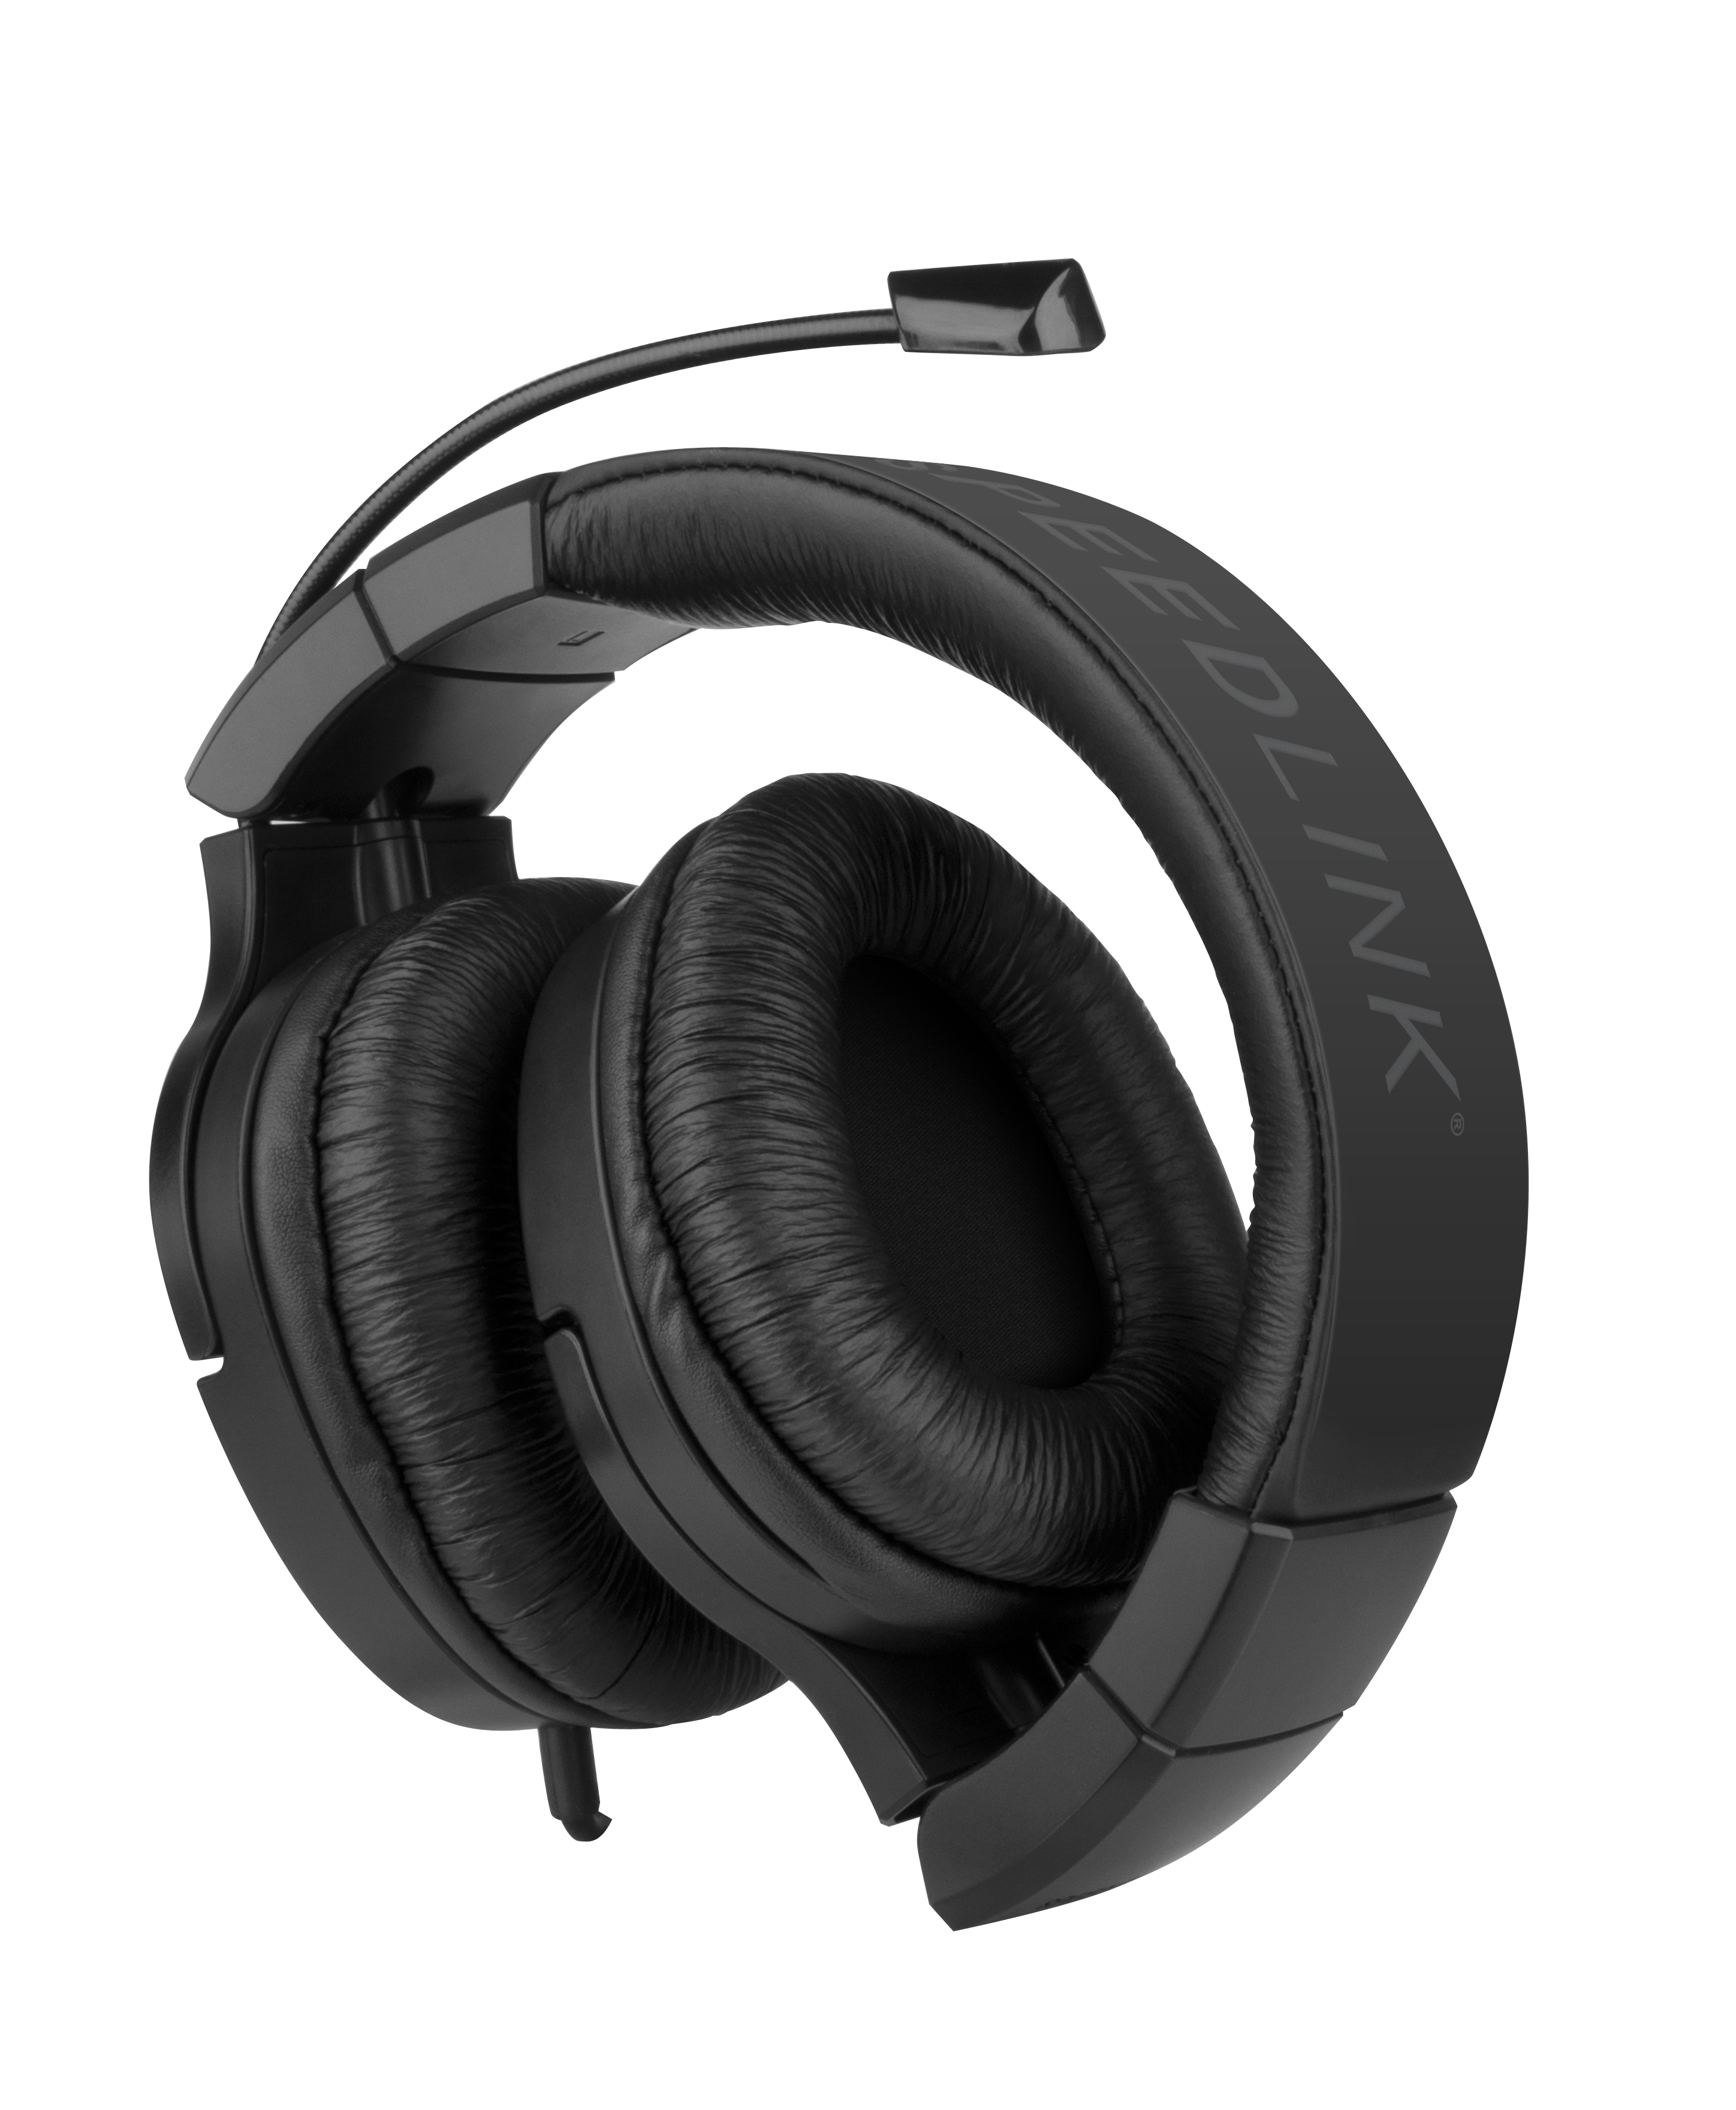 MEDUSA 5.1 True Surround Headset, black